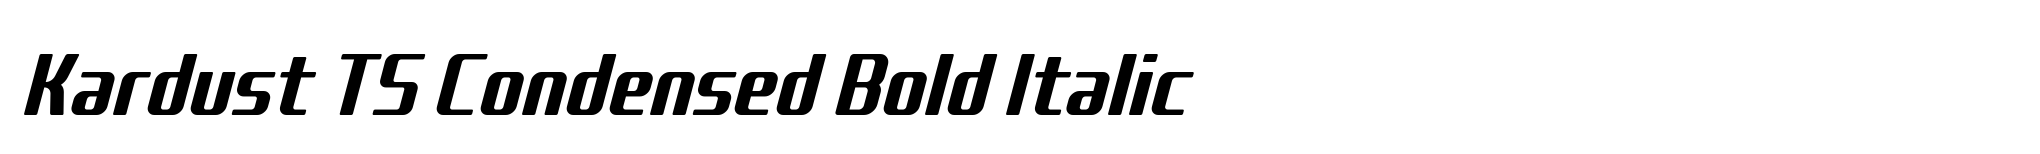 Kardust TS Condensed Bold Italic image